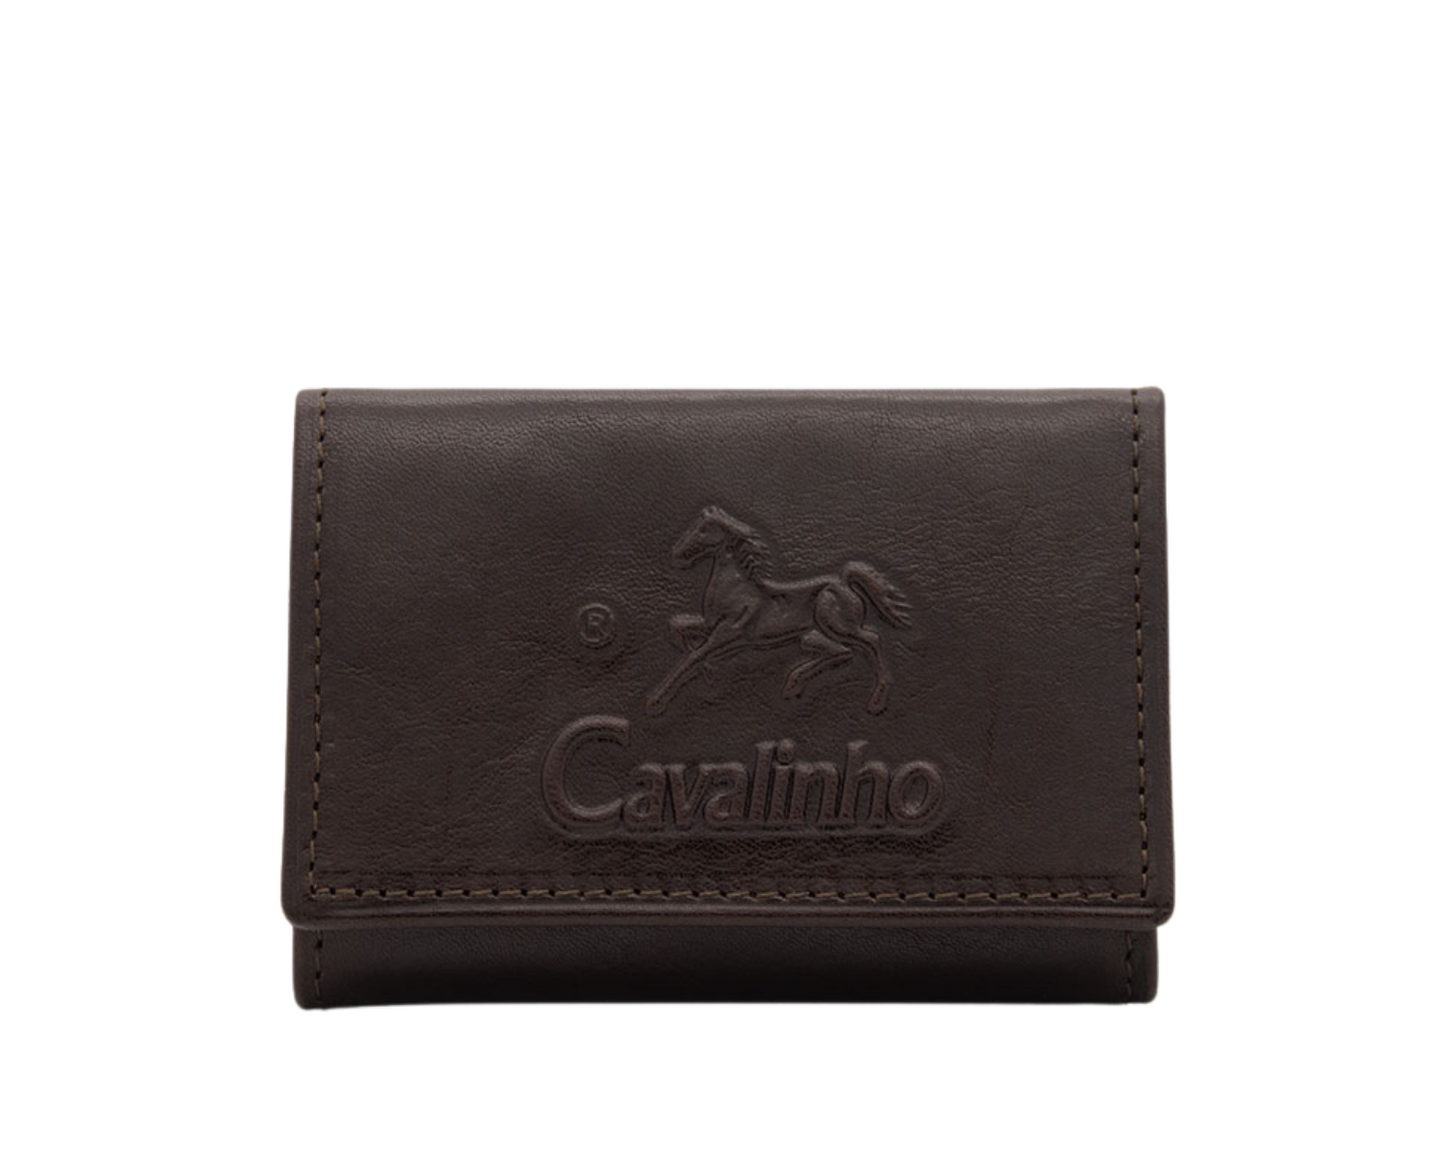 Cavalinho Men's Compact Leather Wallet - Brown - 28610539_e5a64142-6917-4ef0-b3f7-179594f09d8e